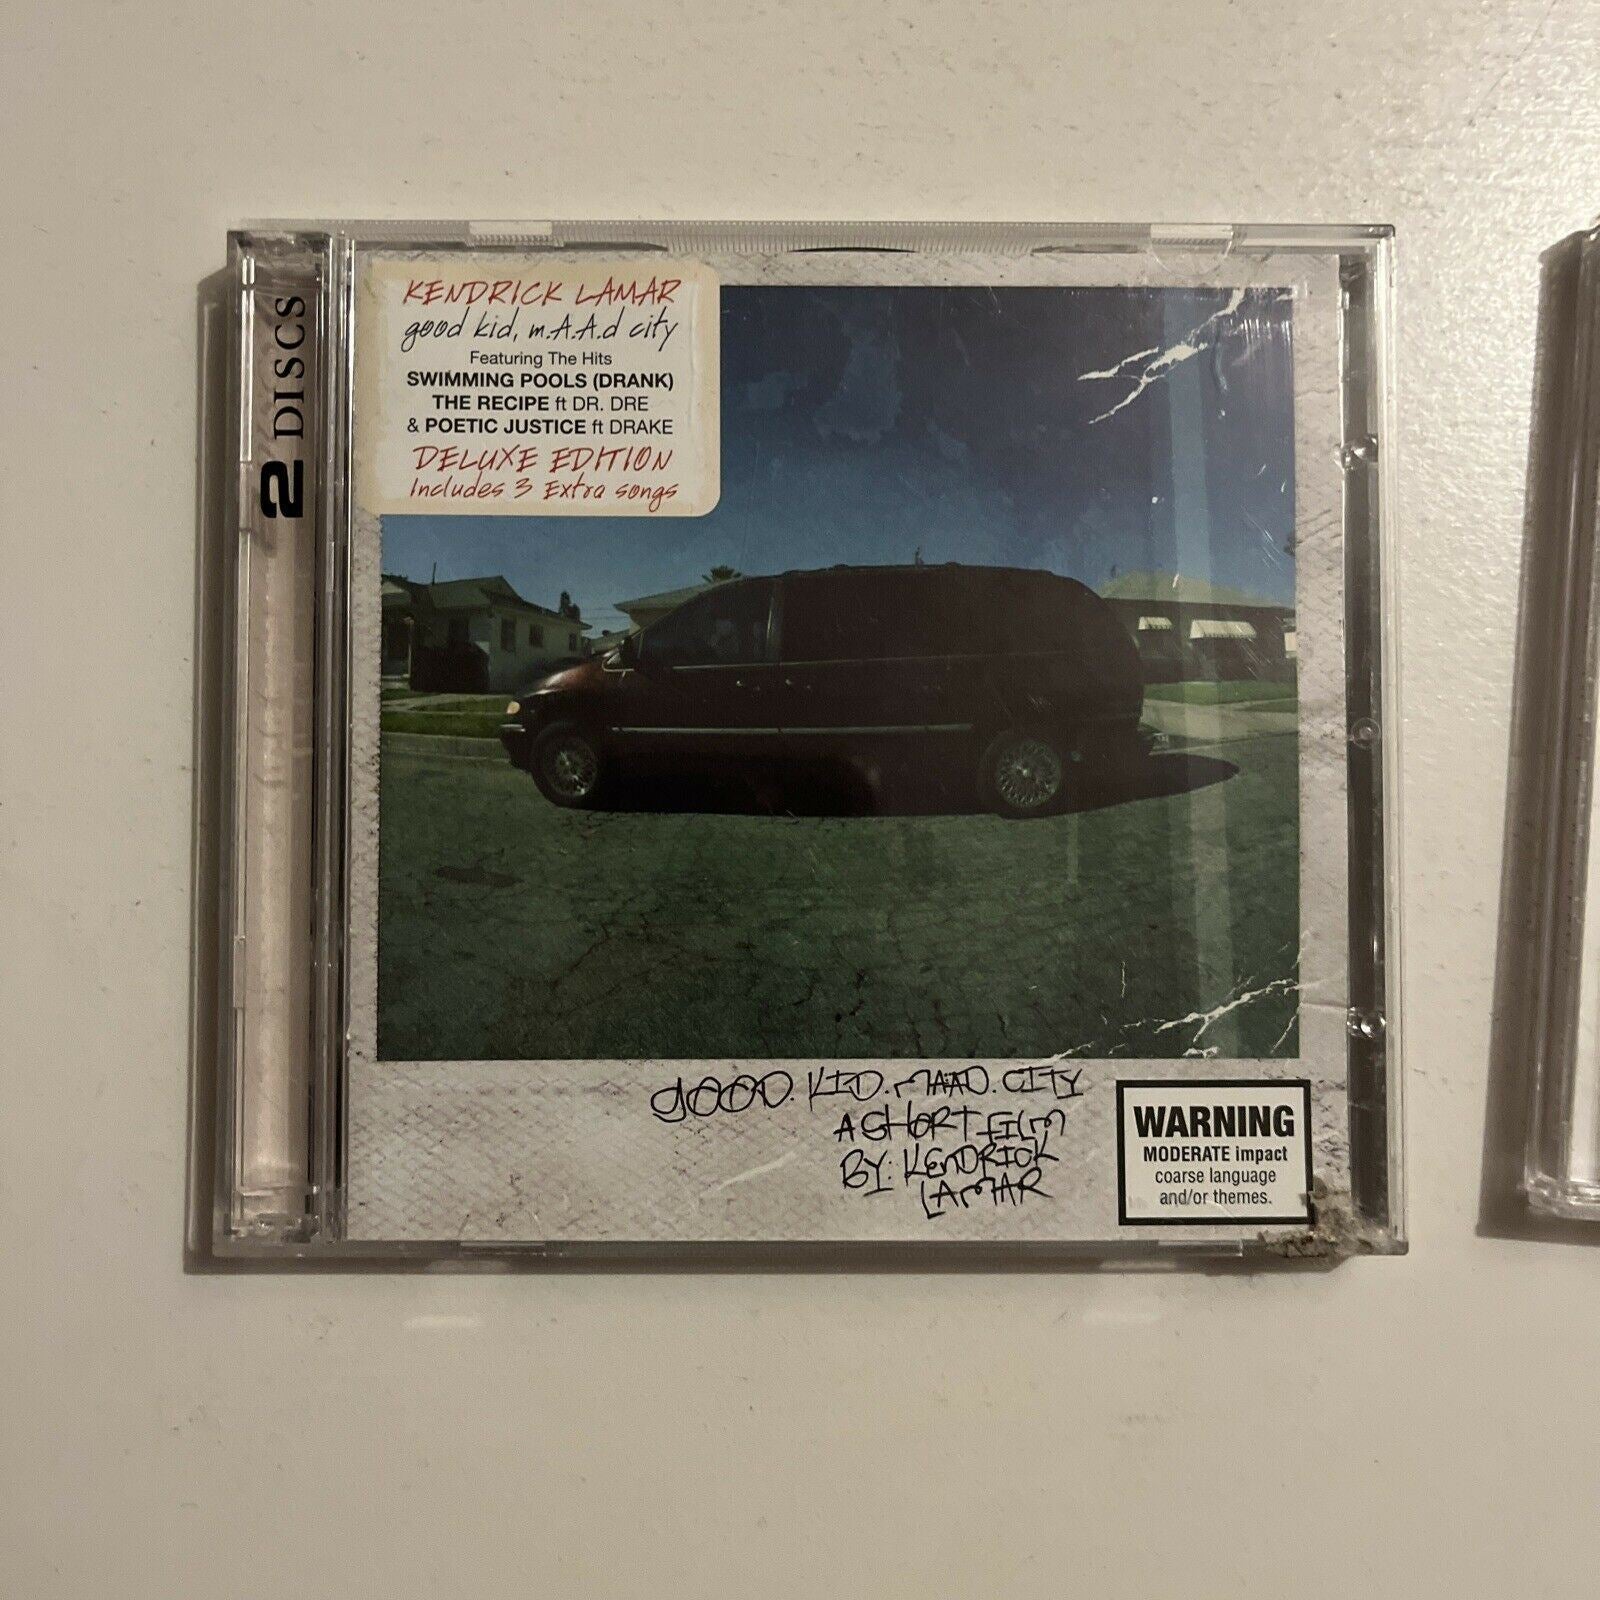  Kendrick Lamar: Vinyl LP Album Pack (Good Kid Mad City, To Pimp  A Butterfly): CDs & Vinyl